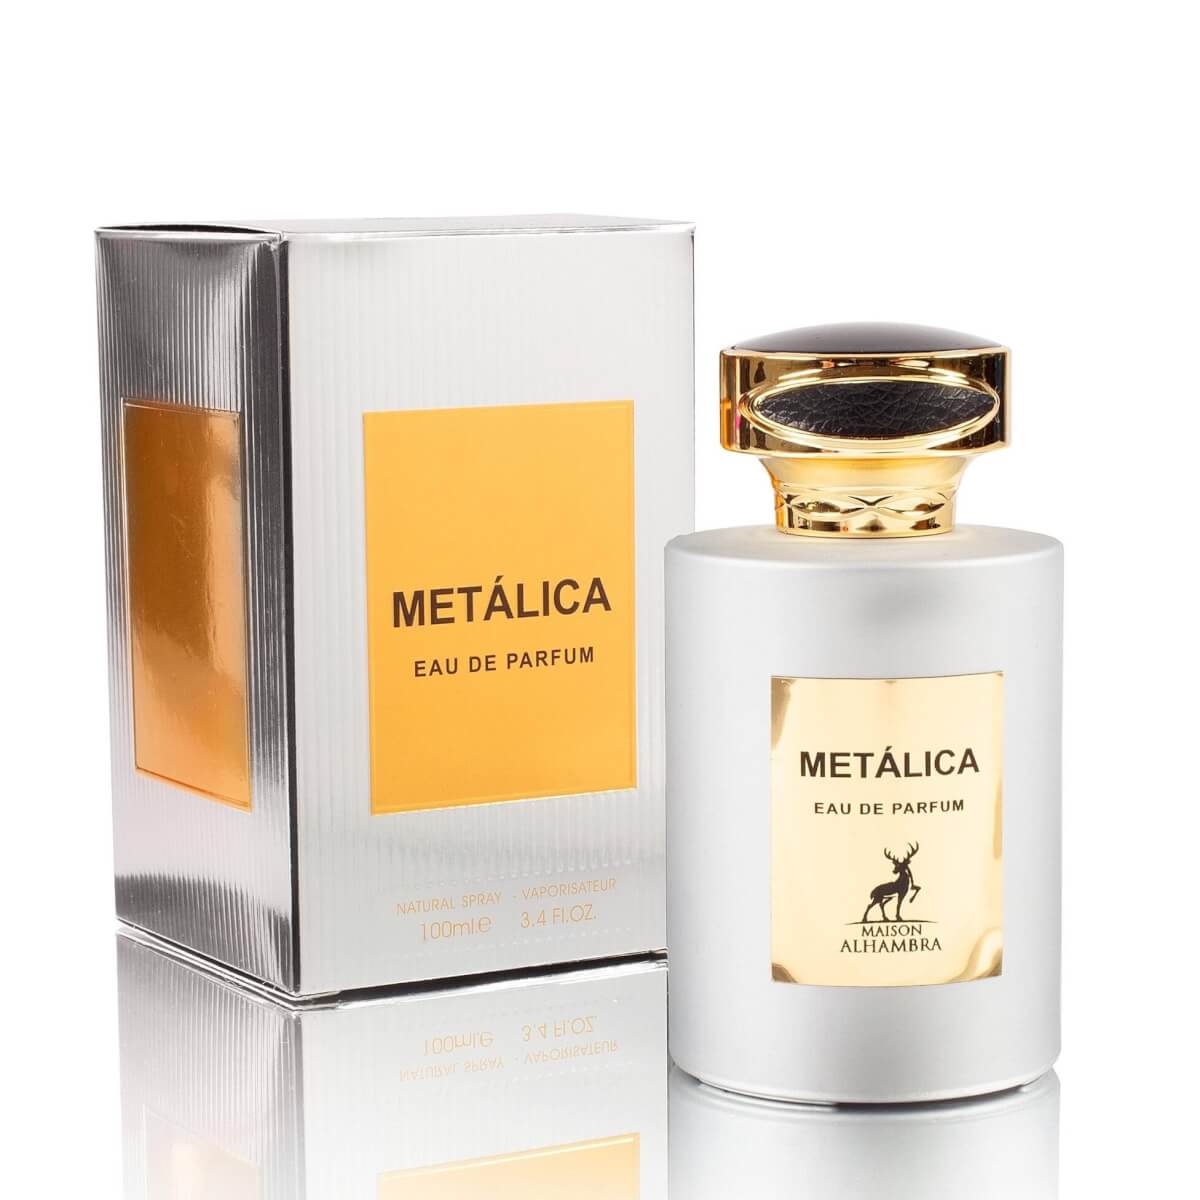 Metalica Perfume / Eau De Parfum By Maison Alhambra / Lattafa (Inspired By Tom Ford'S Metallic)